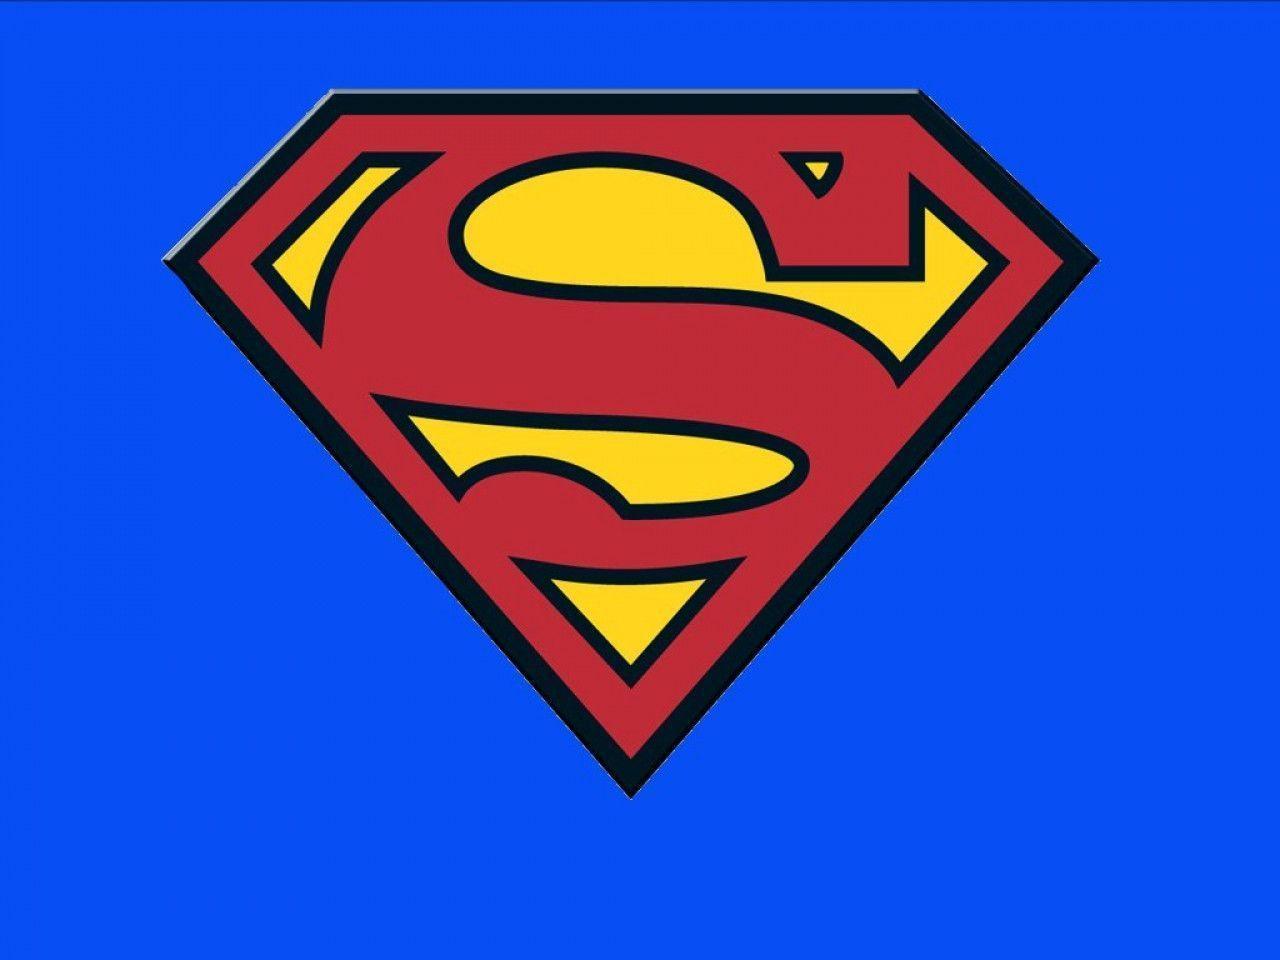 Superman logo wallpaper superman image gallery